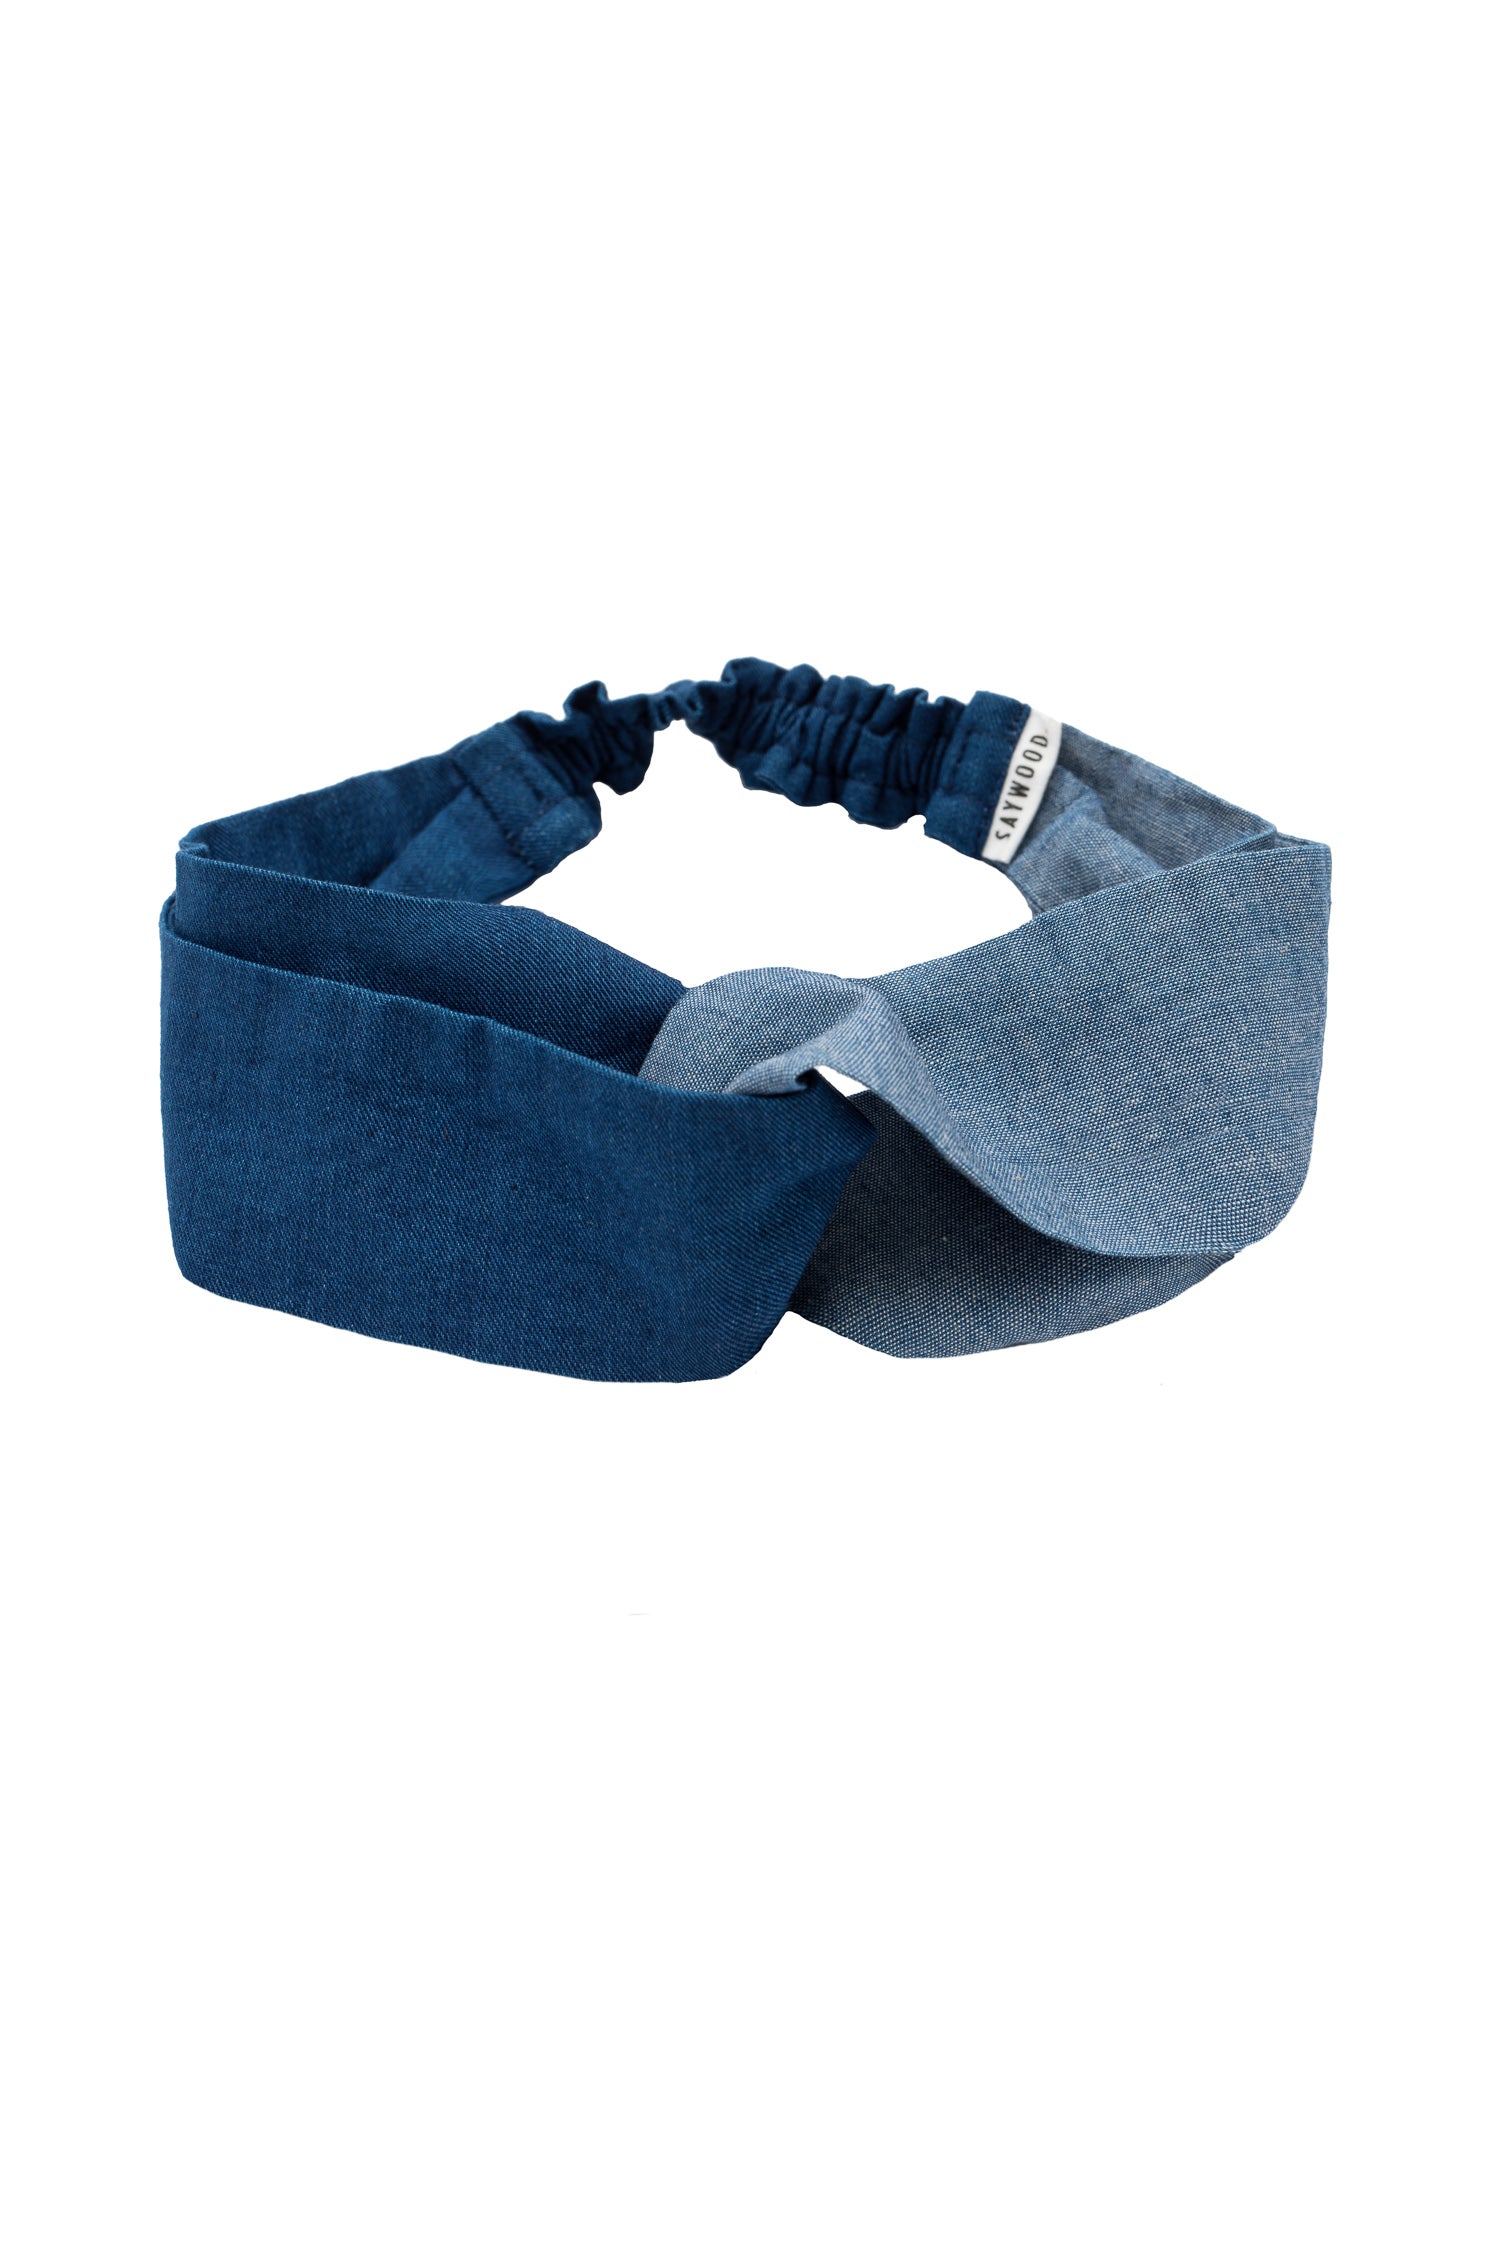 Japanese Denim twist headband, sustainable hair accessory